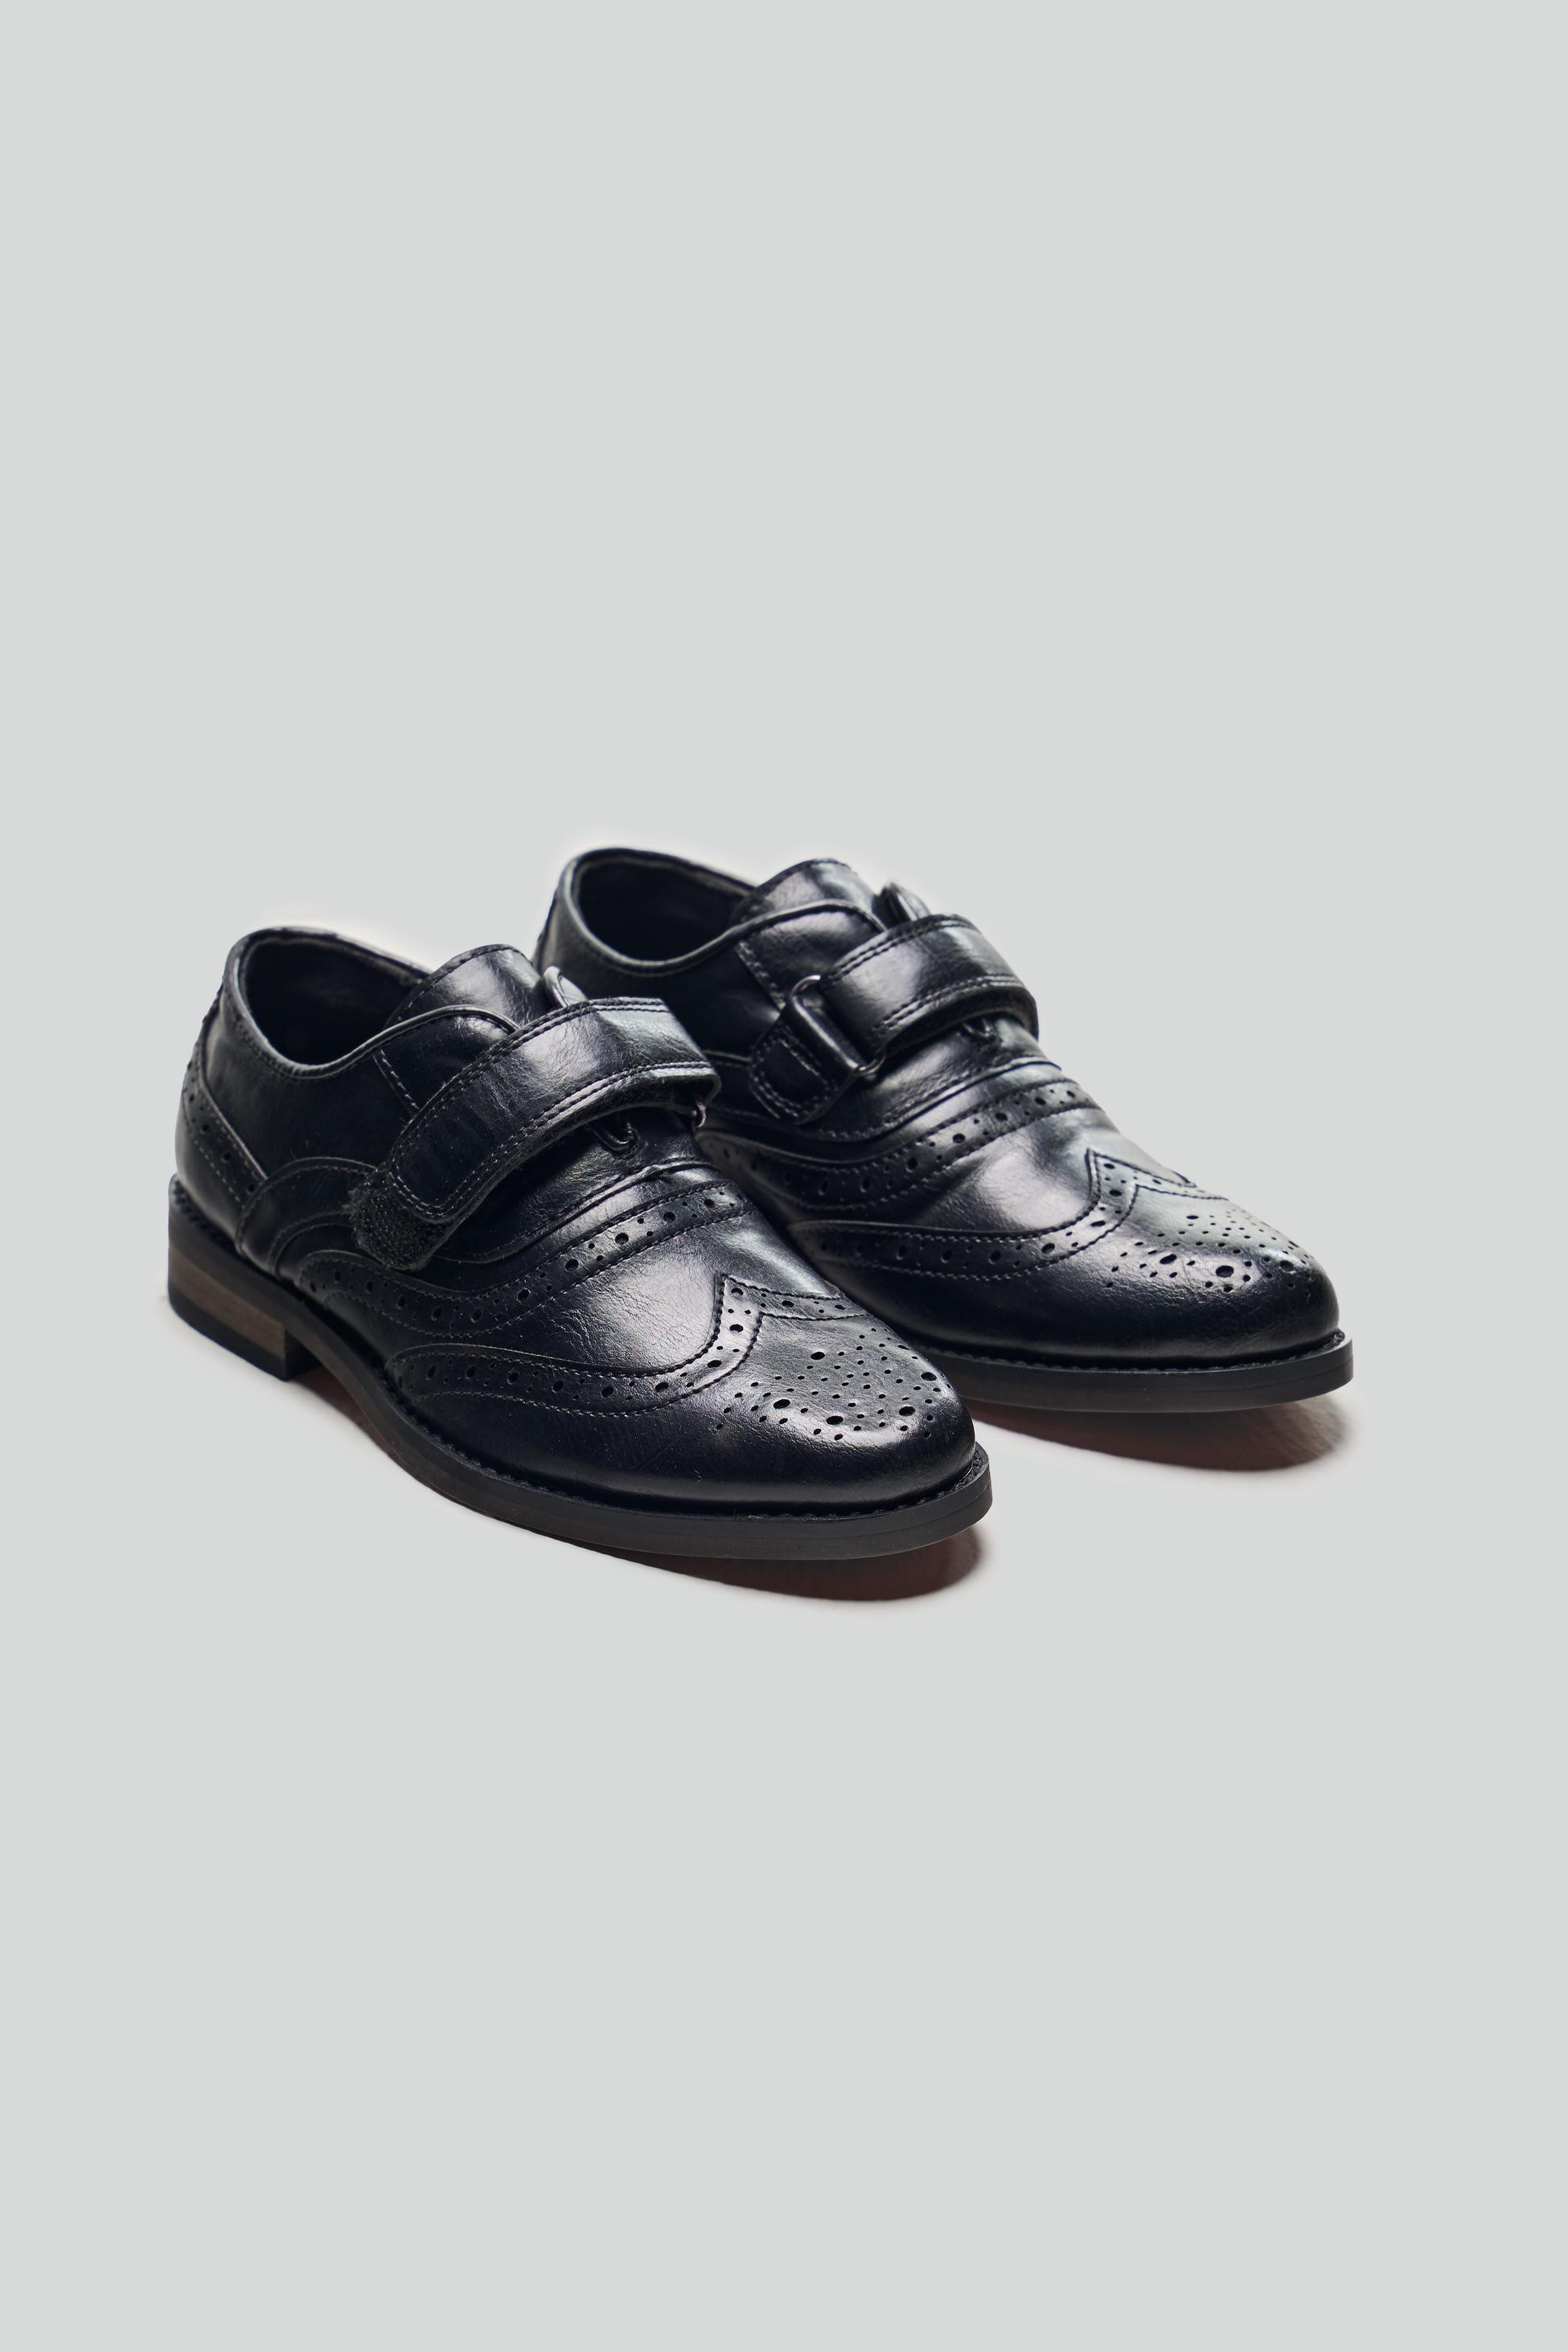 Boys Velcro Oxford Brogue Dress shoes - RUSSEL - Black